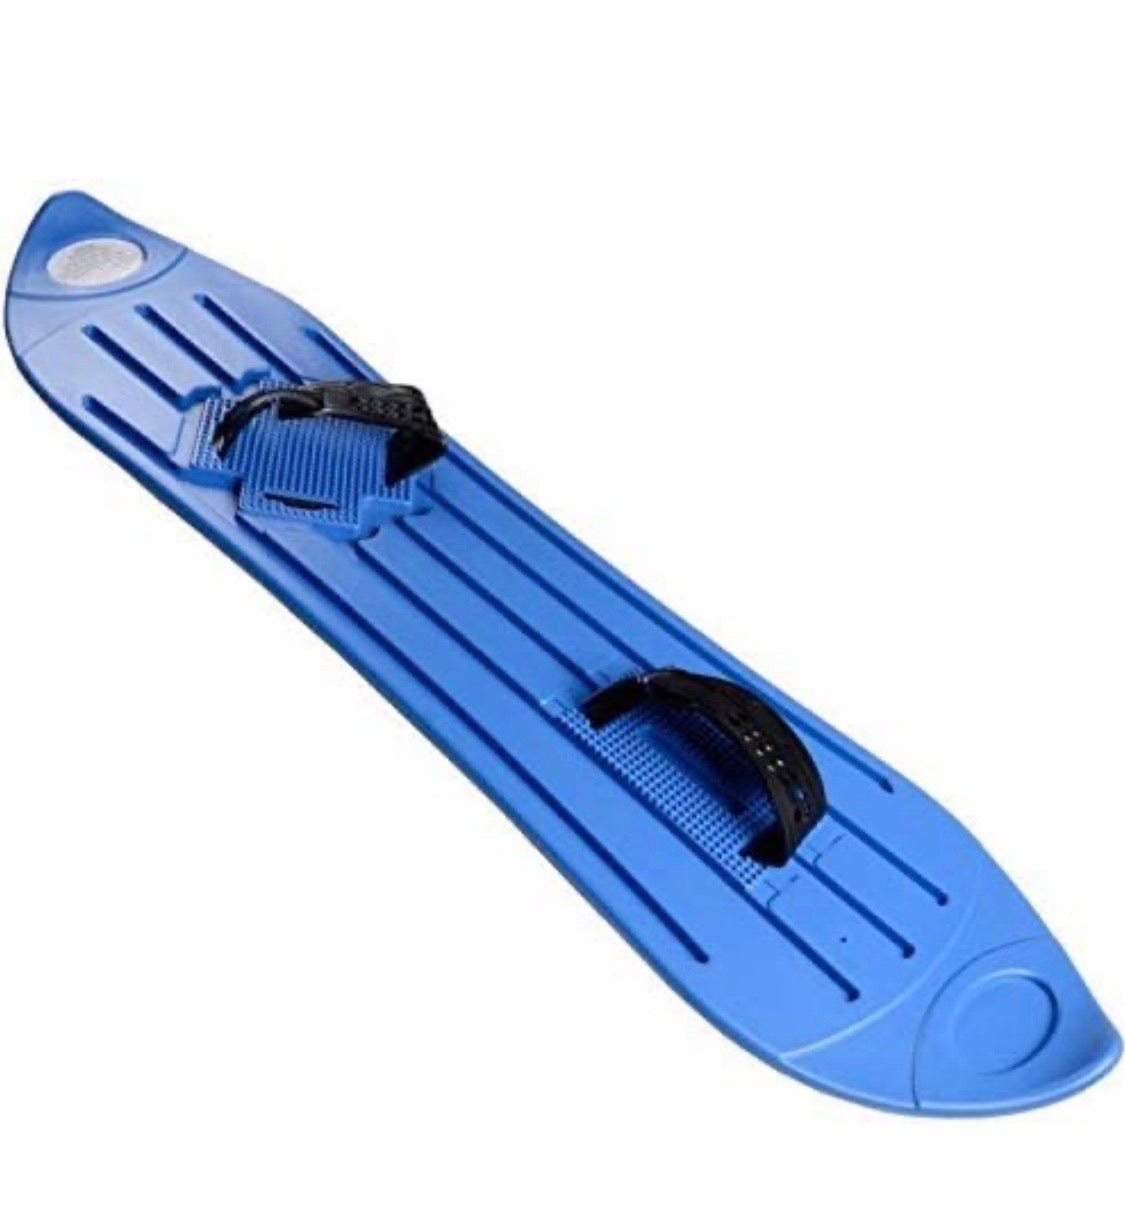 White Out Snowboard /Sandboard Sledge